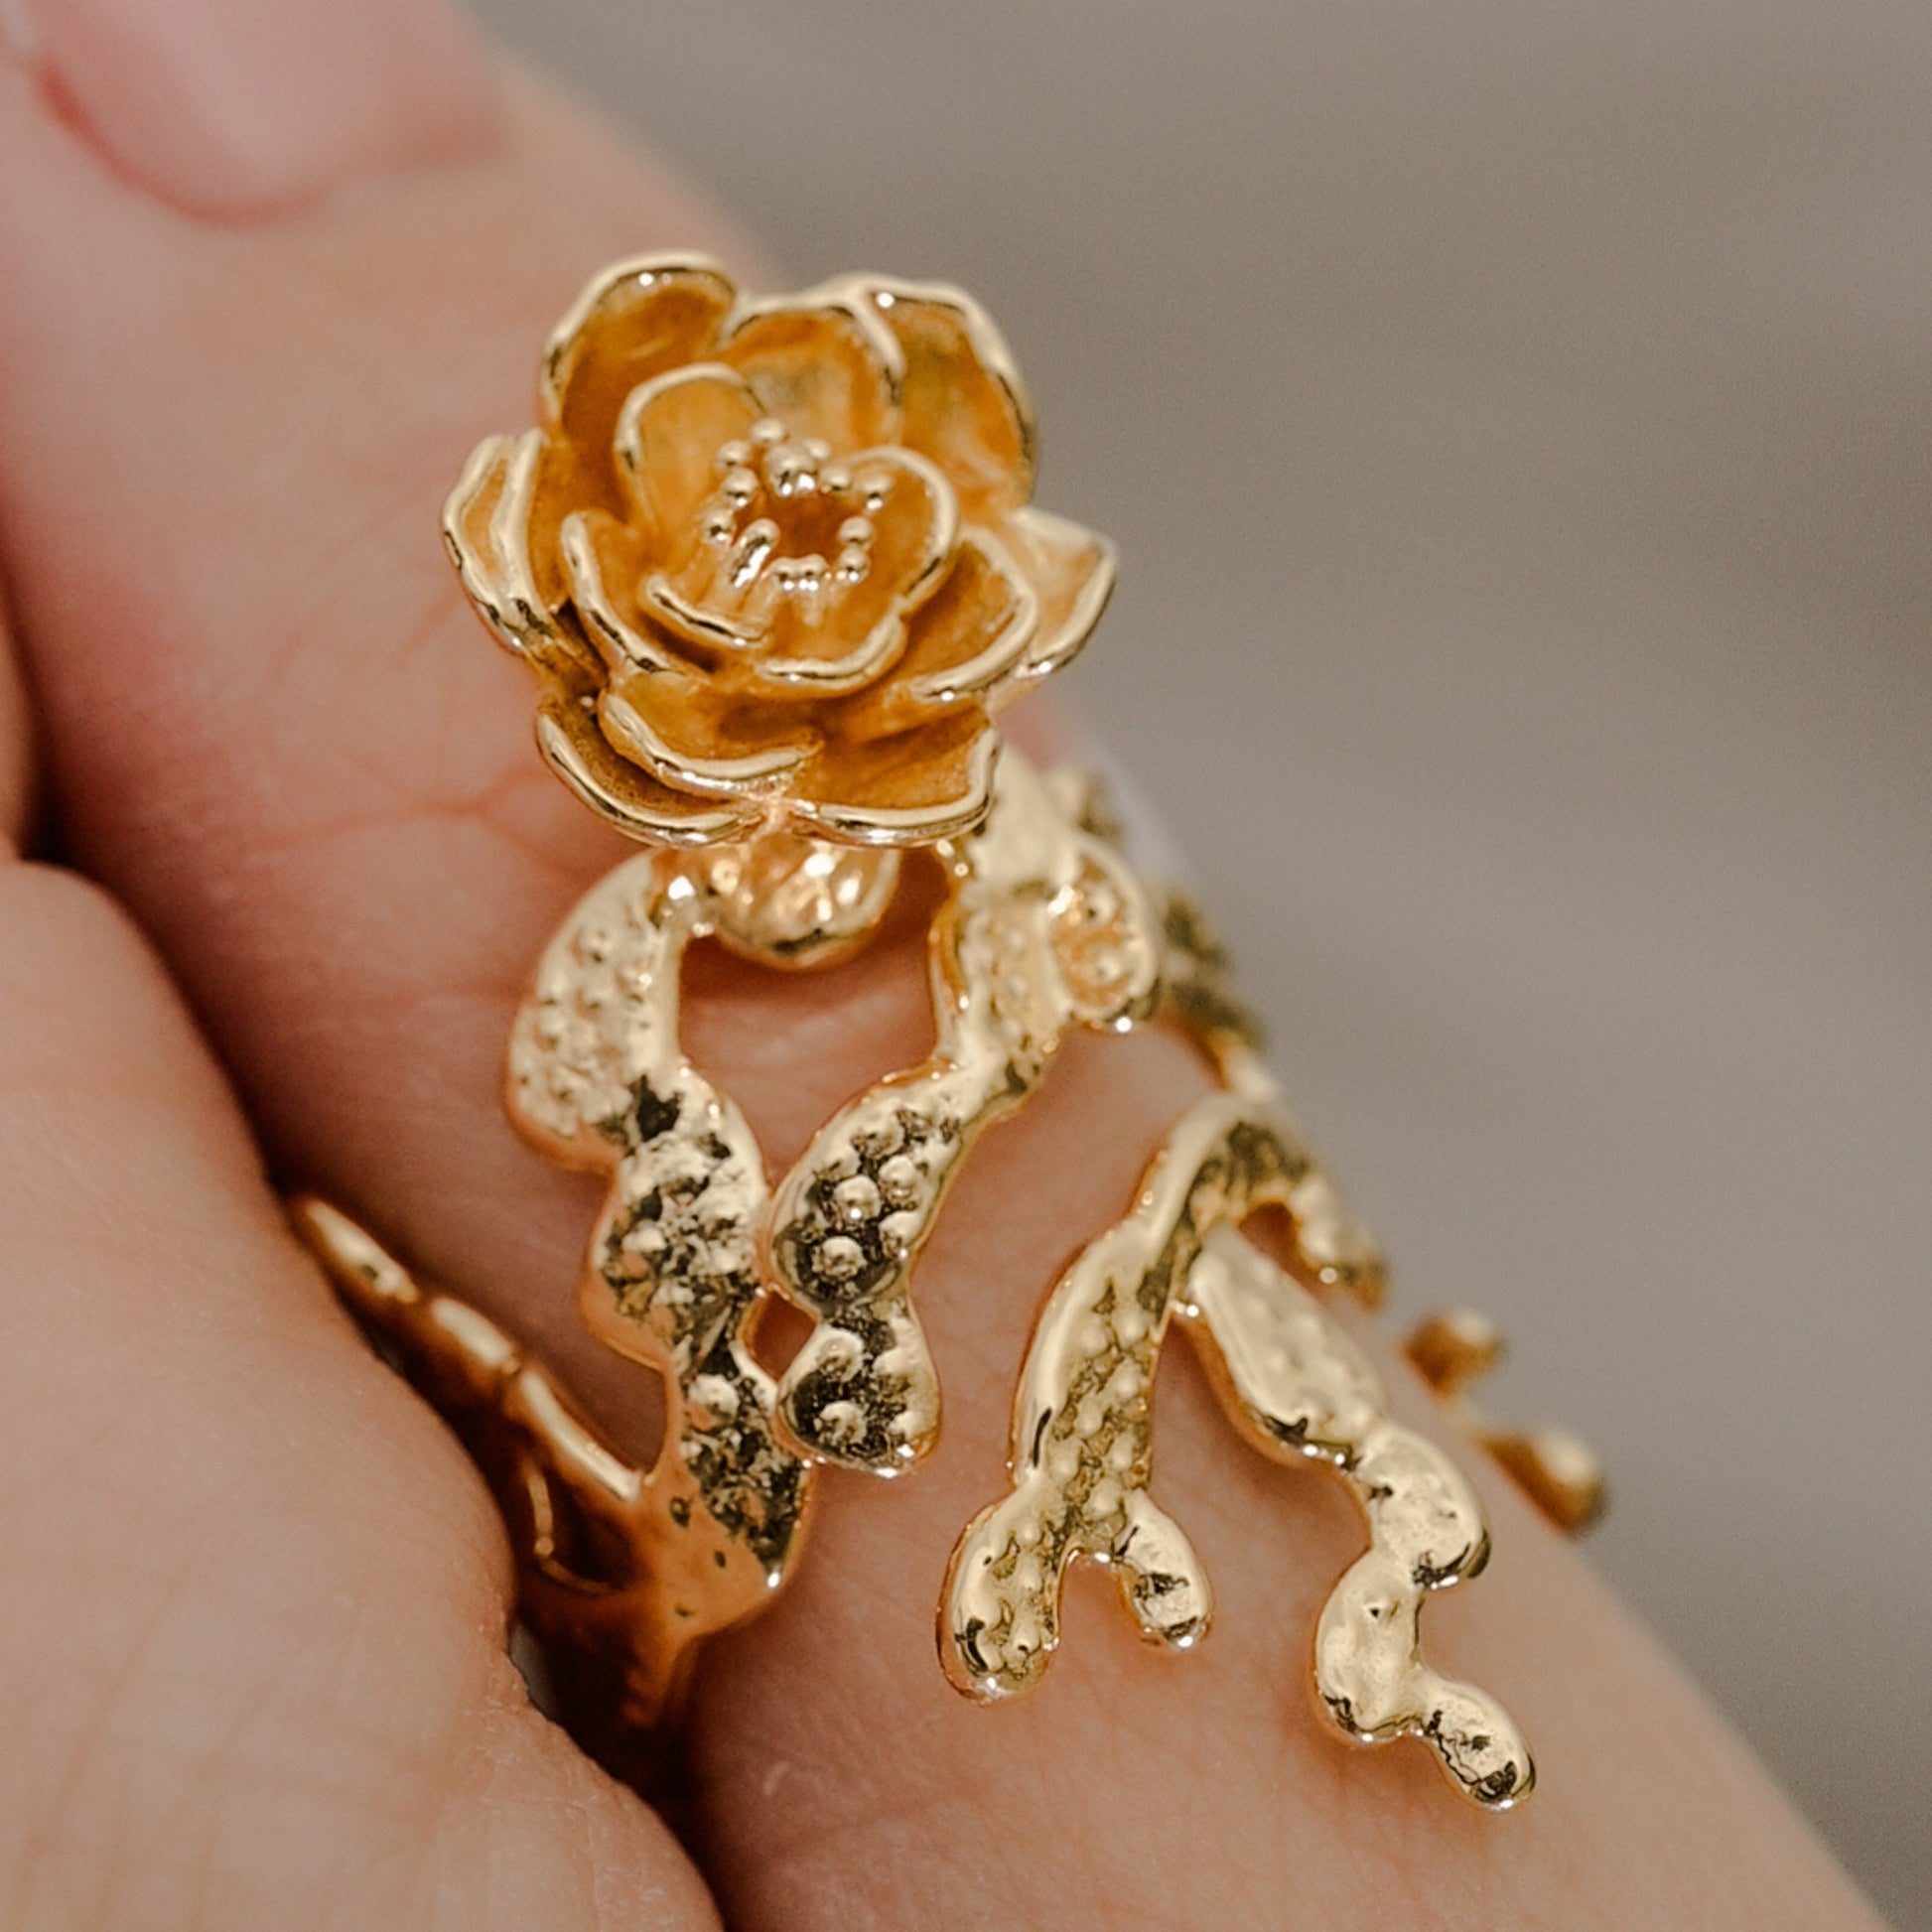 Cactus Rose Adjustable Ring 3D printed in 14K Yellow Gold, 14k White Gold, 14K Rose Gold